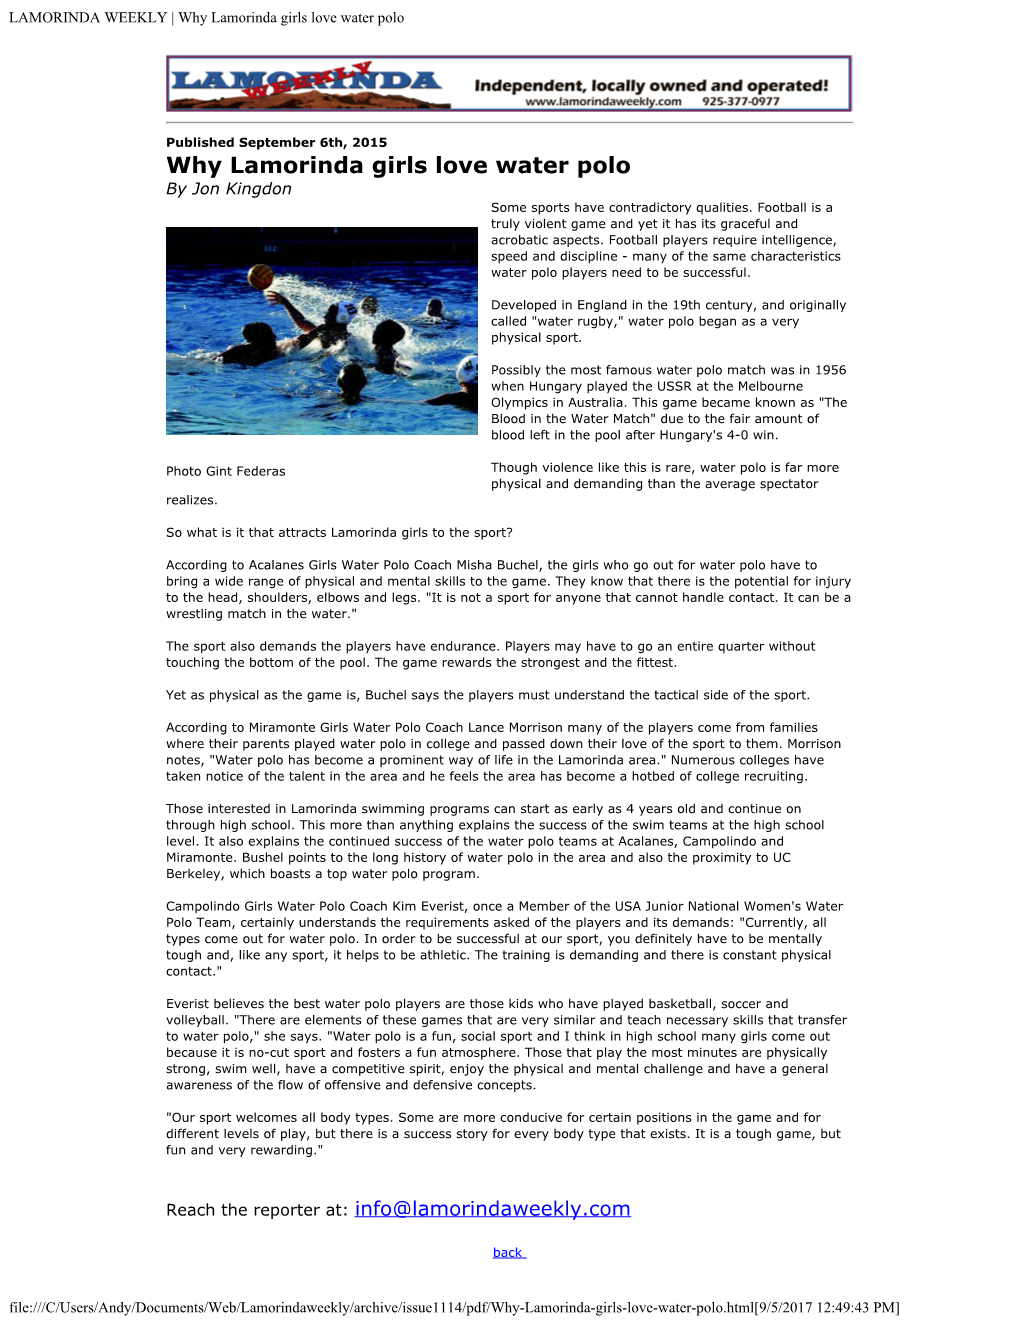 Why Lamorinda Girls Love Water Polo